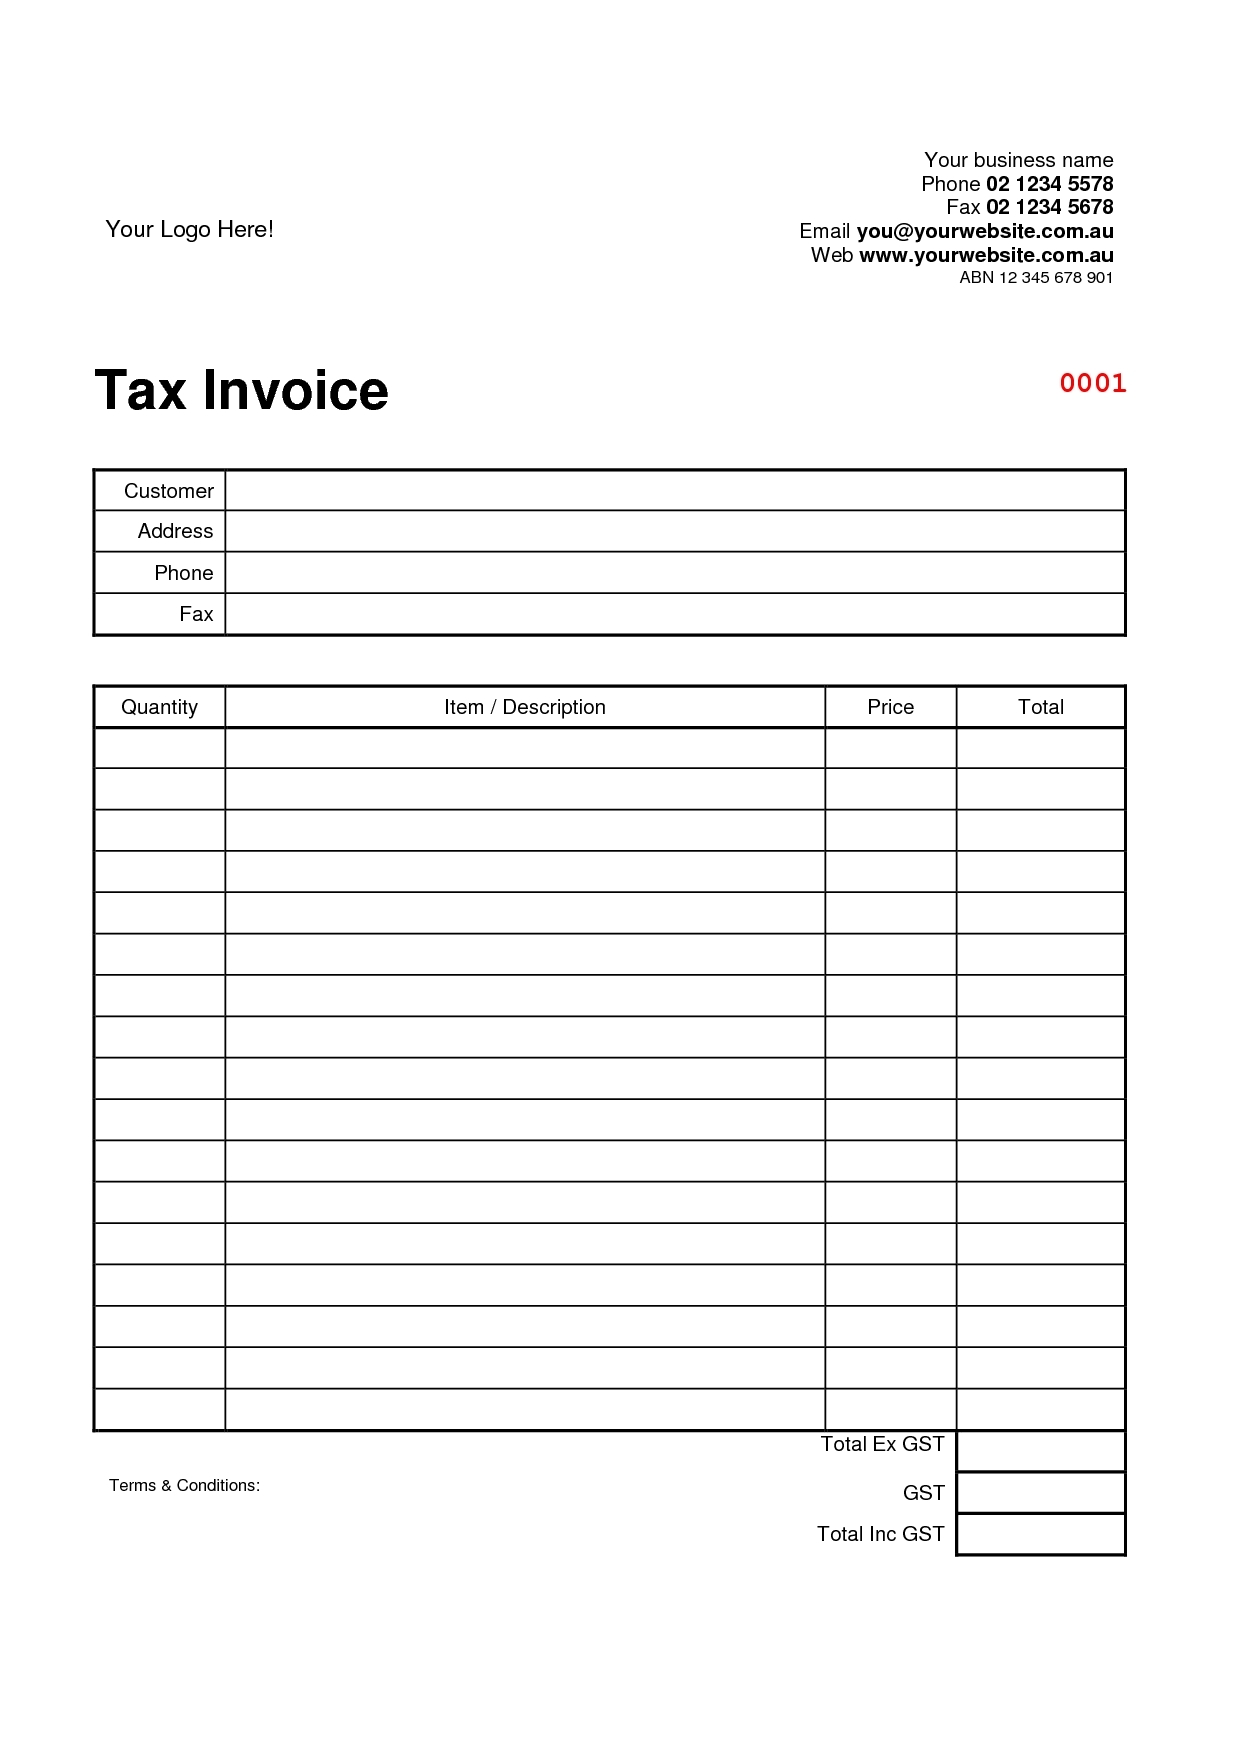 sample tax invoice template invoice template free 2016 template for tax invoice